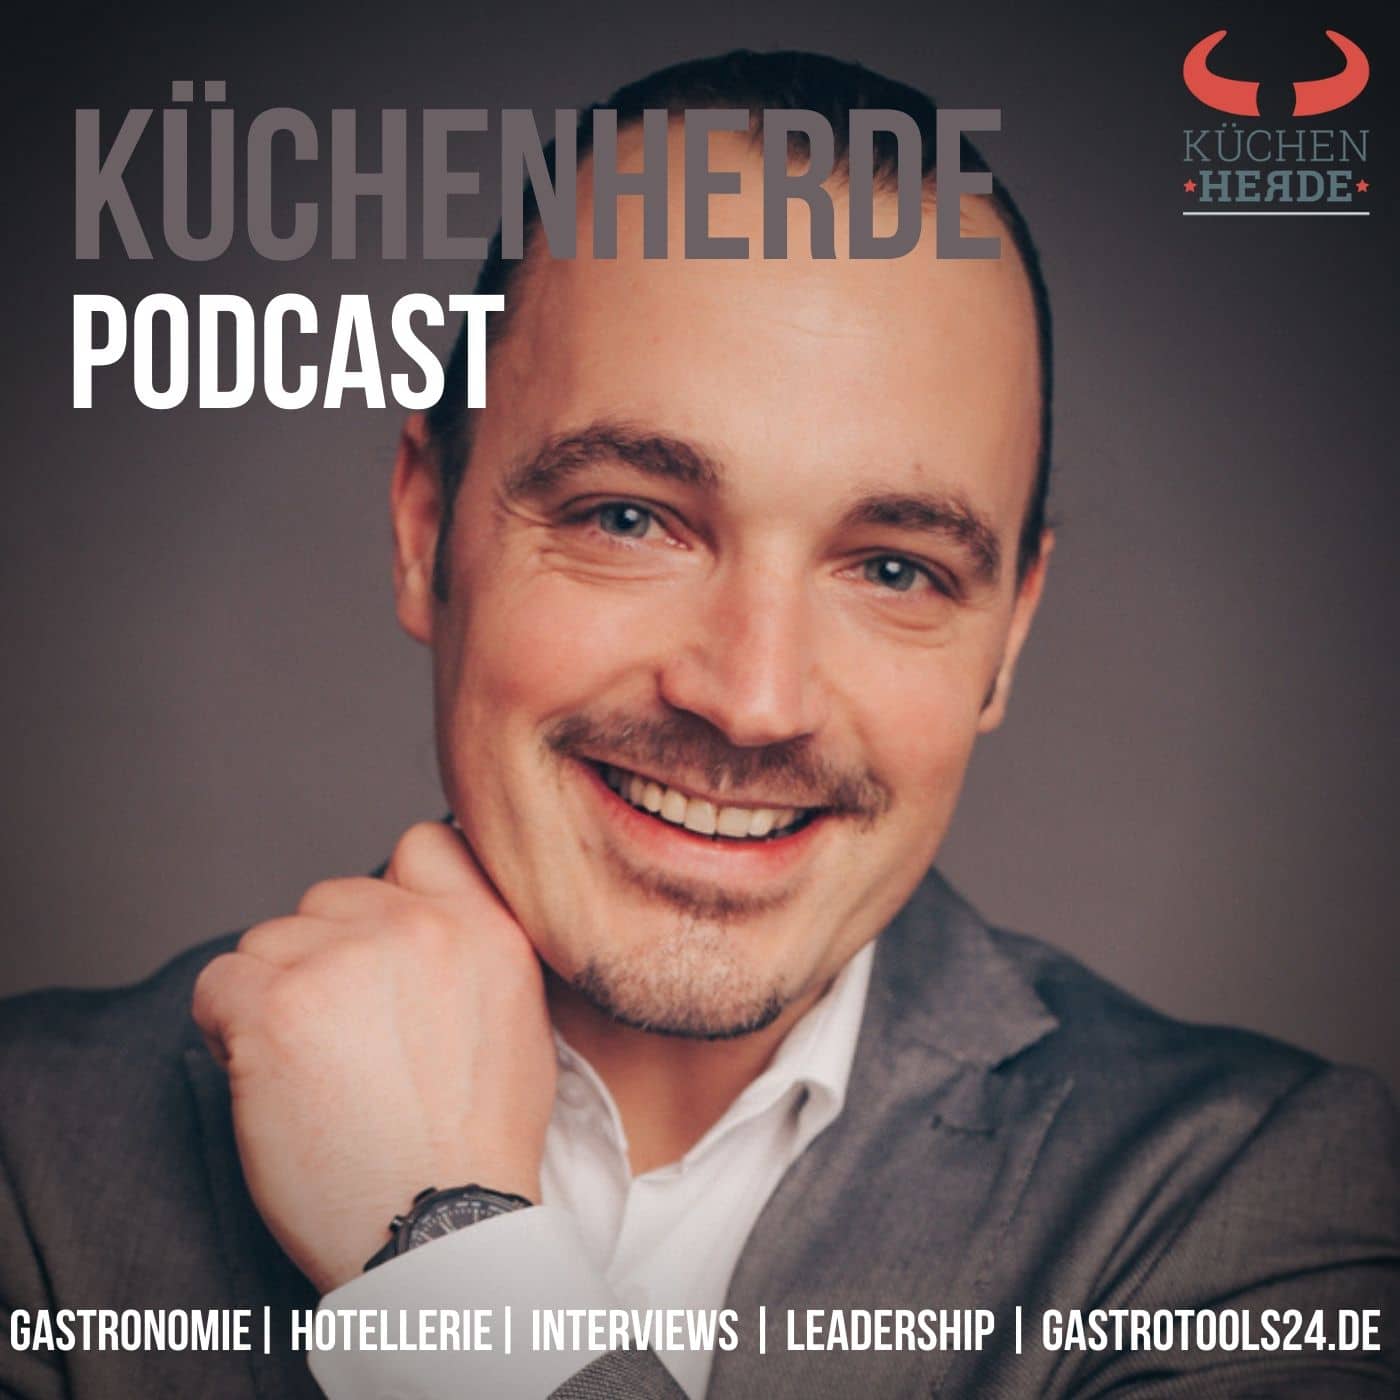 Küchenherde Podcast